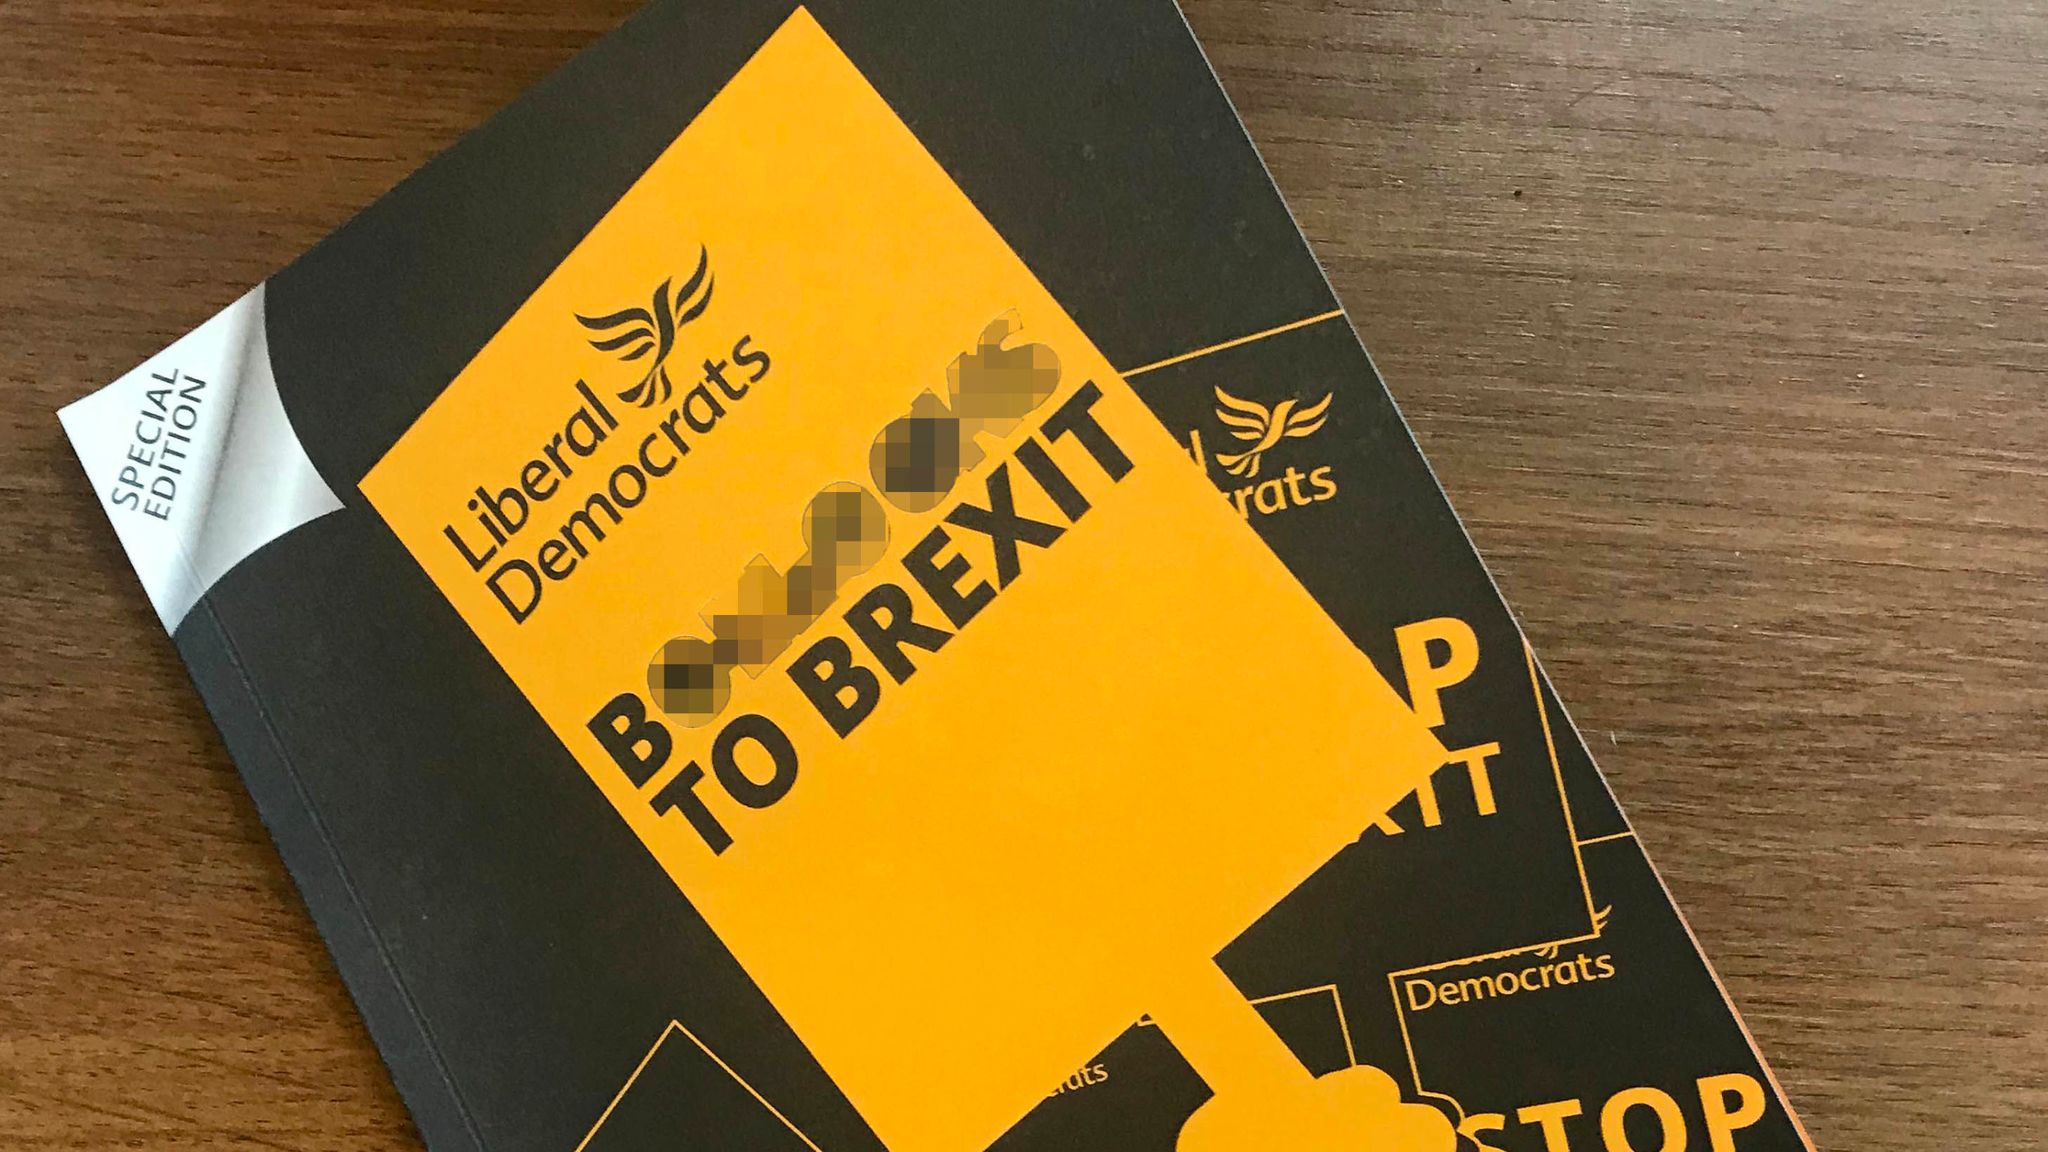 Liberal Democrats launch 'B******* to Brexit' manifesto ahead of EU